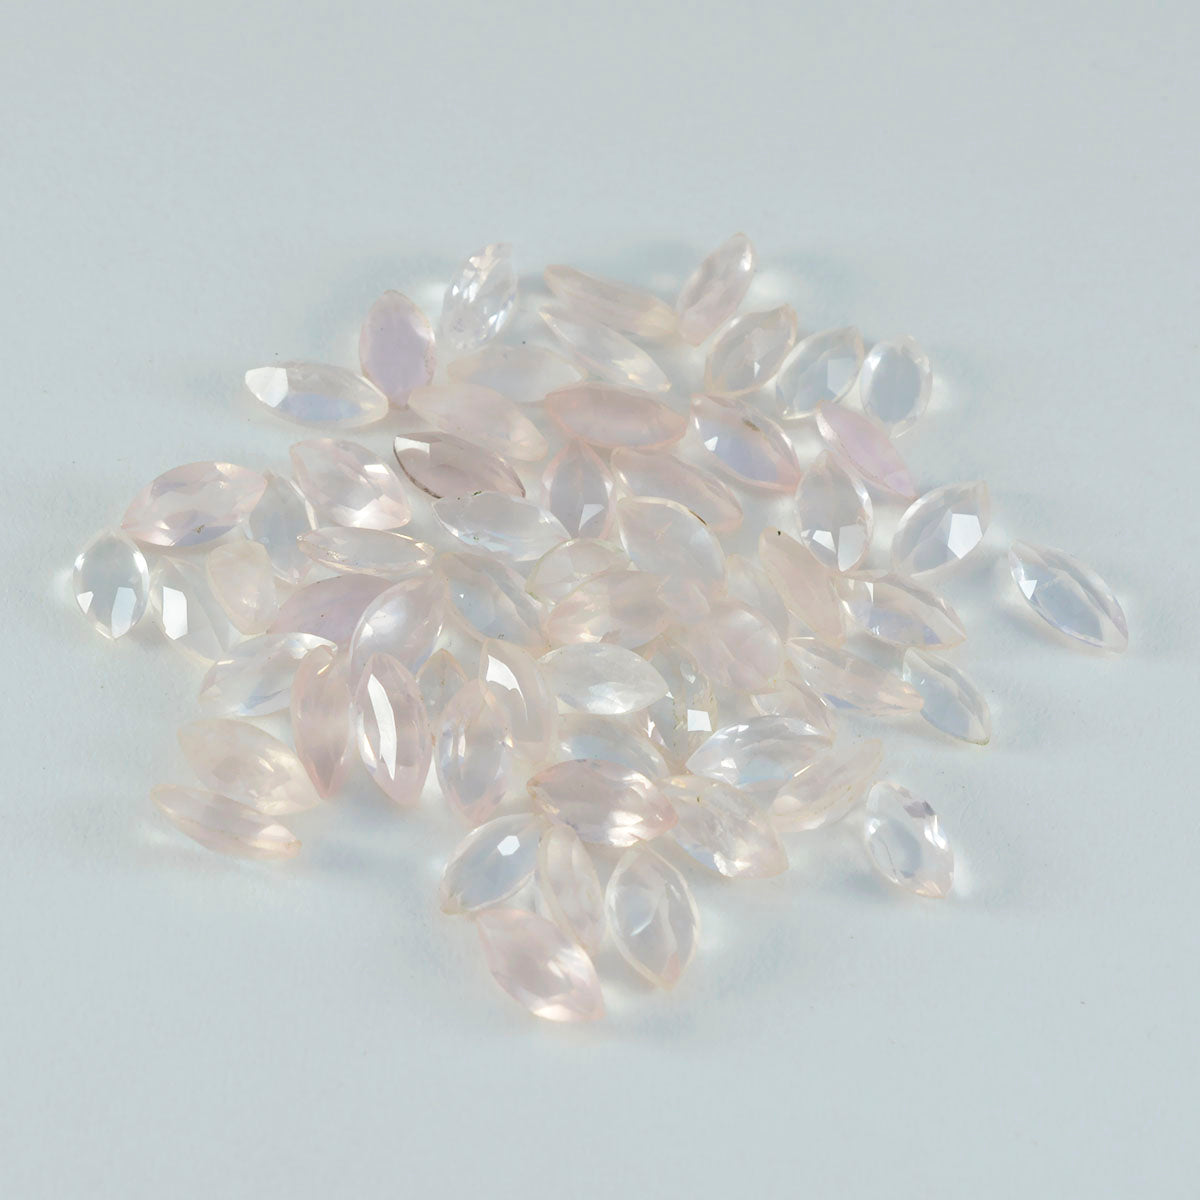 riyogems 1 pz quarzo rosa sfaccettato 2x4 mm forma marquise gemme sfuse di qualità A+